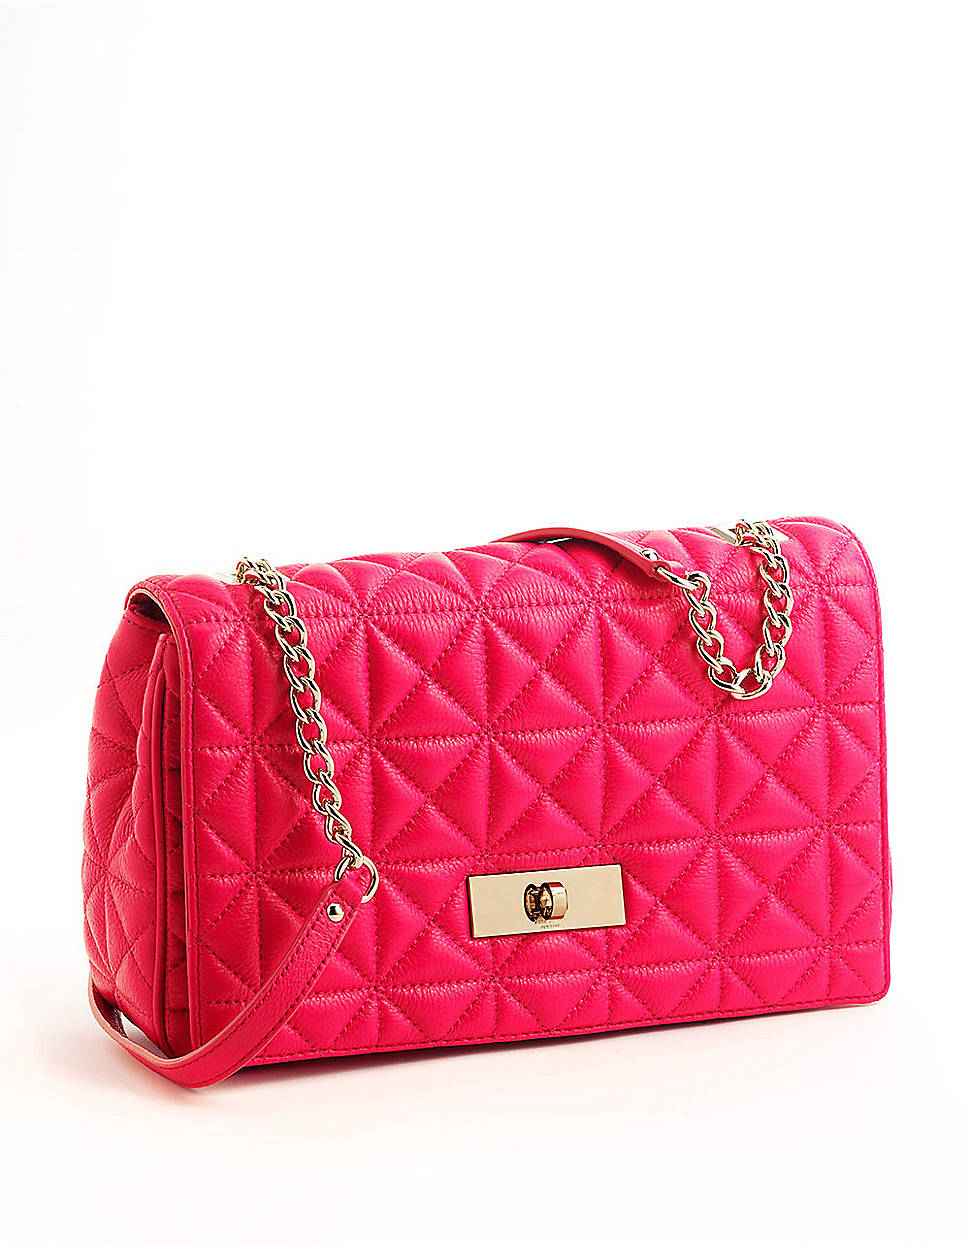 Kate Spade Sedgewick Place Delaney Quilted Leather Shoulder Bag in Pink ...